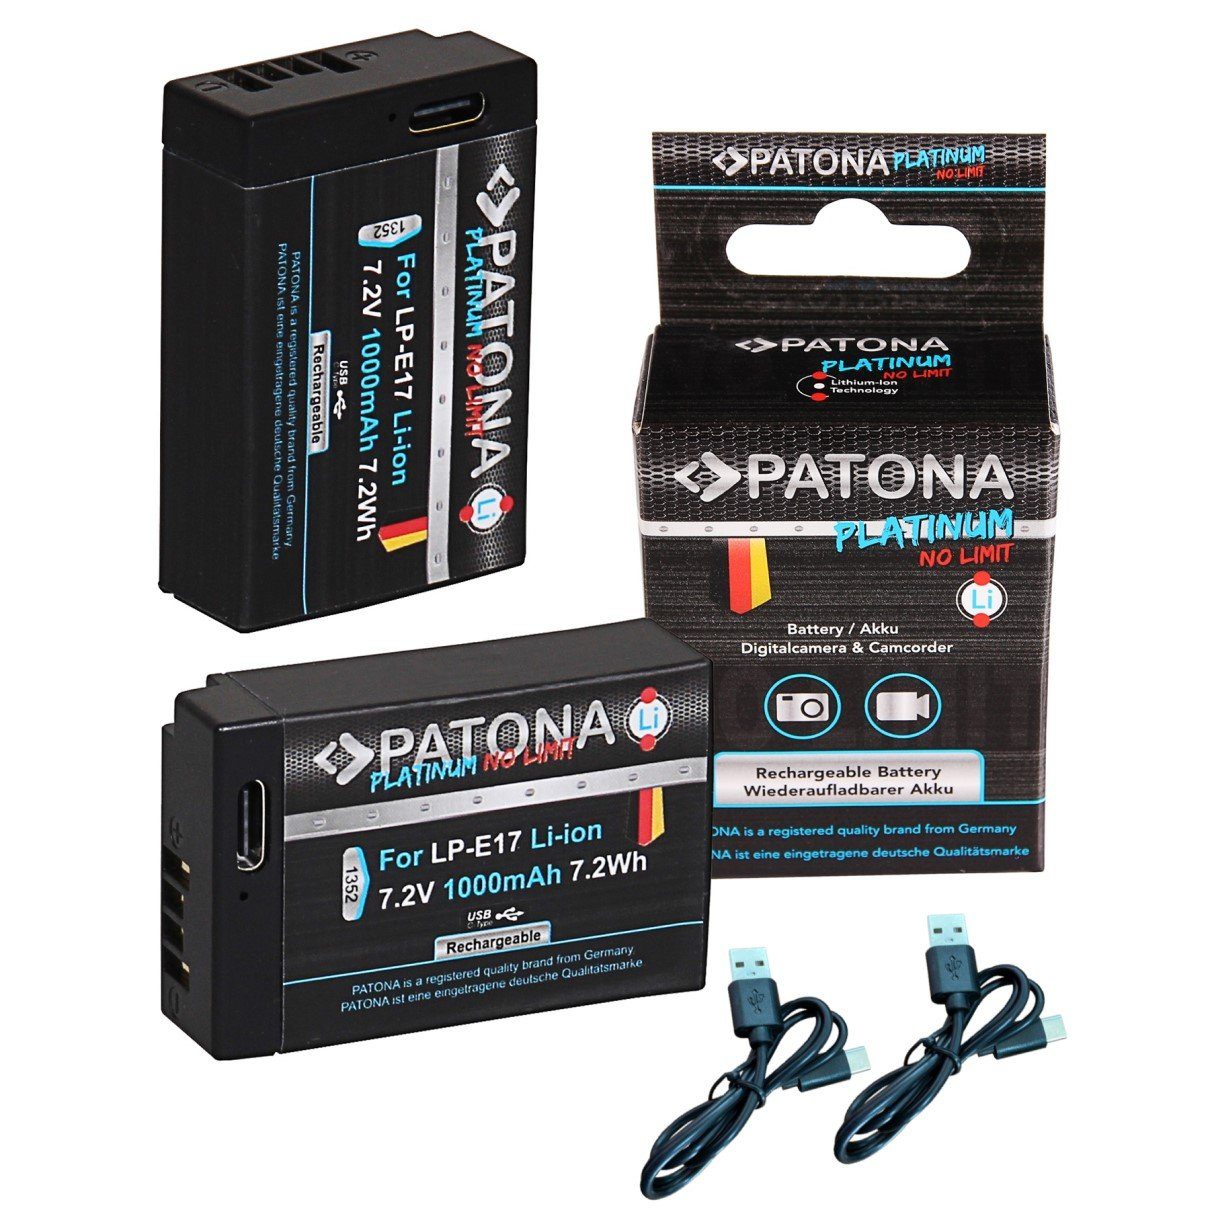 Patona 2x Platinum Akku für Canon LP-E17 Kamera-Akku Ersatzakku Kameraakku 1000 mAh (7,2 V, 2 St), mit USB-C Input EOS RP 77D 200D 750D 760D 8000D